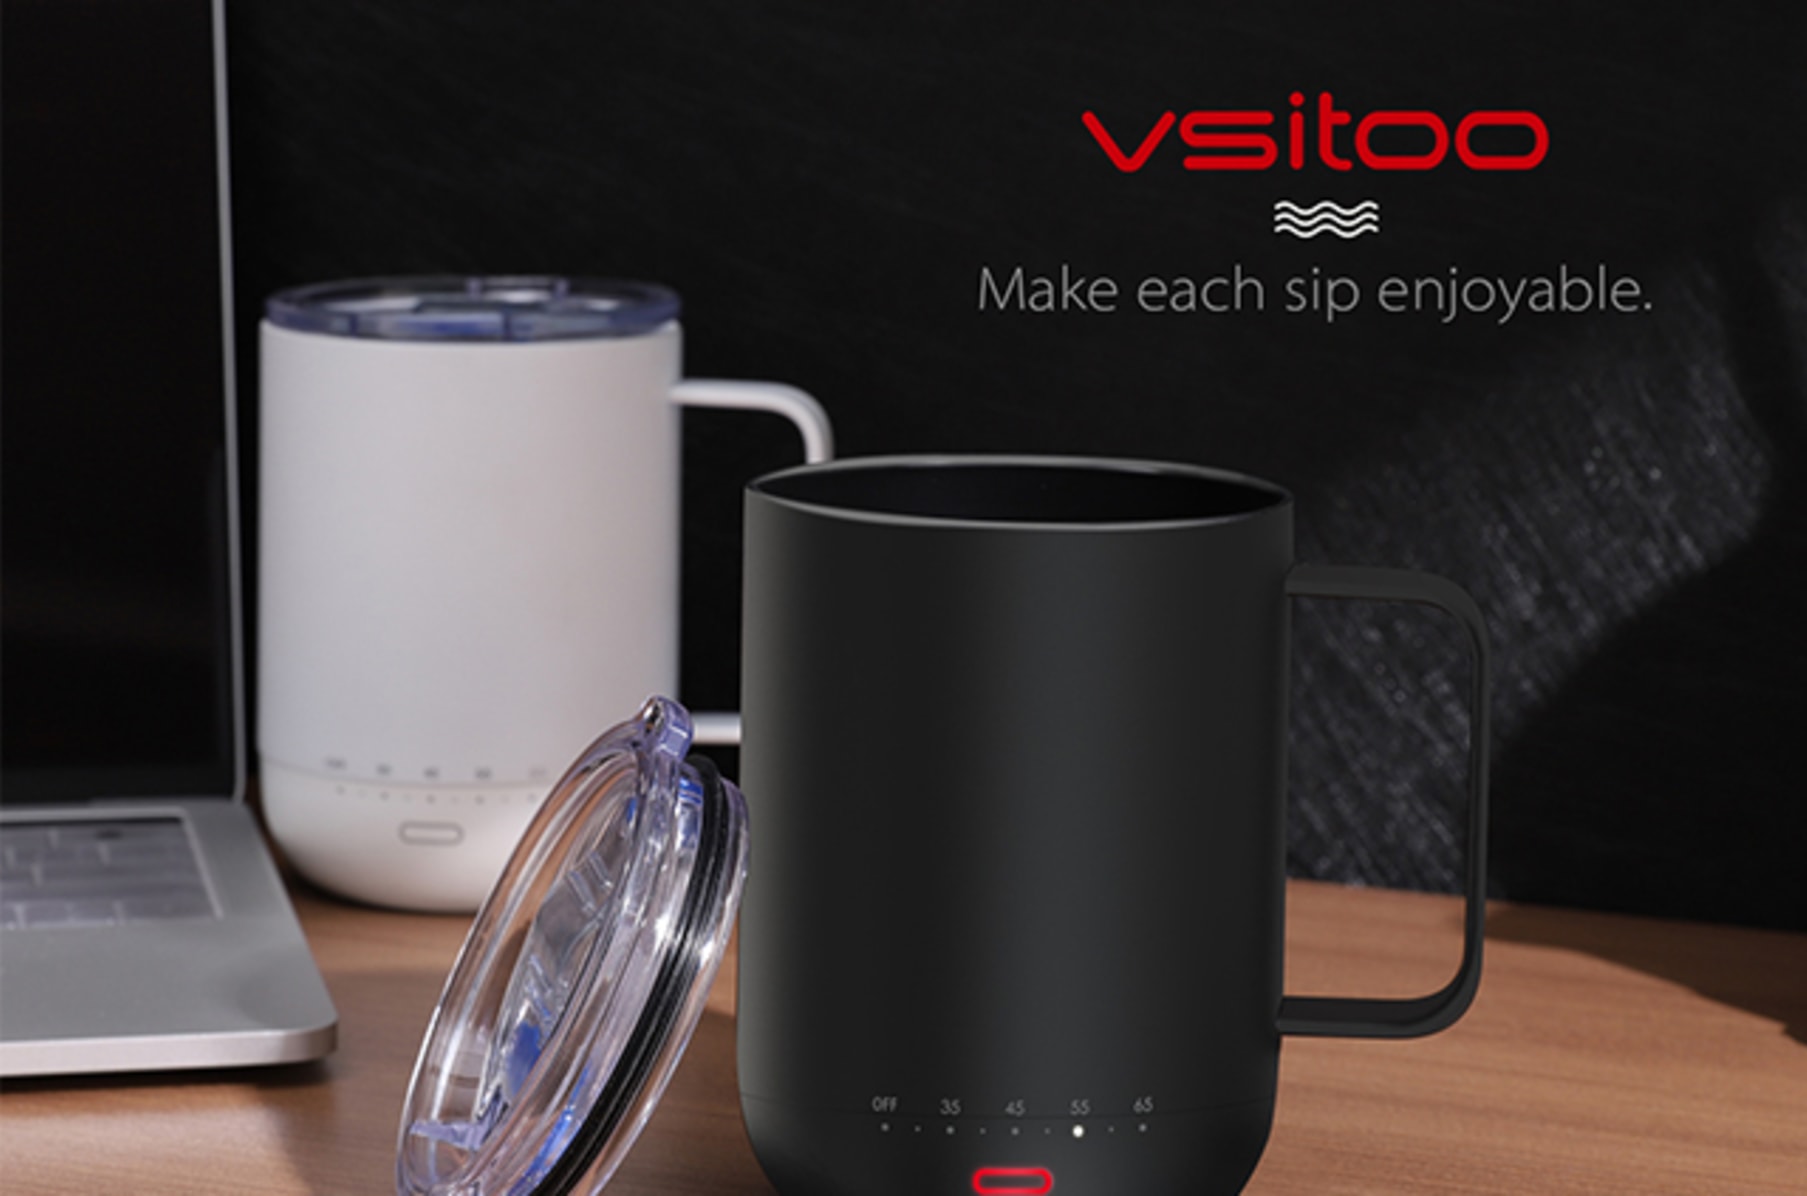 vsitoo S3pro Temperature Control Smart Mug 2 with Lid, Self